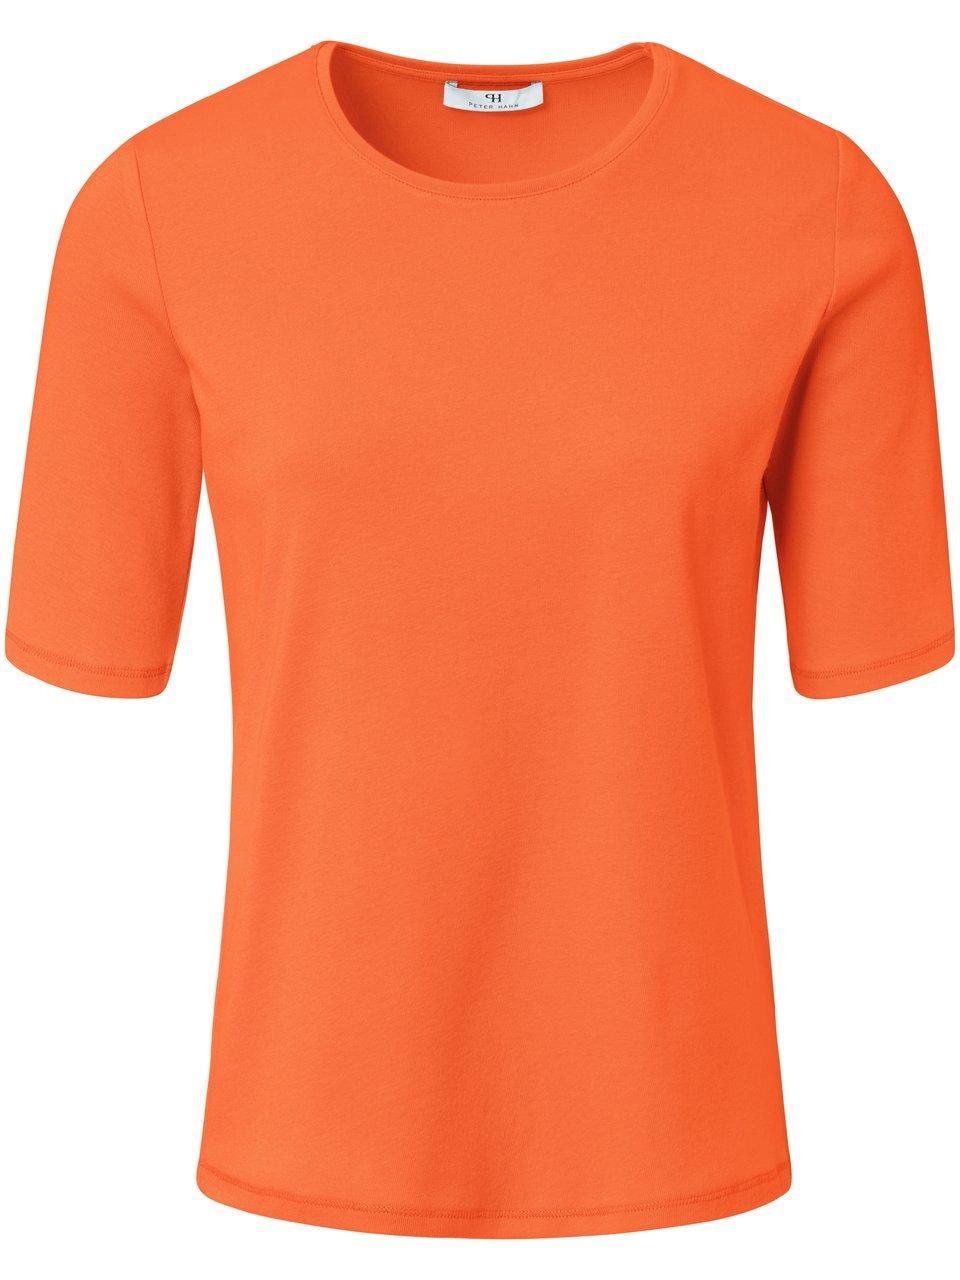 Rundhals-Shirt Peter Hahn orange-Peter Hahn 1